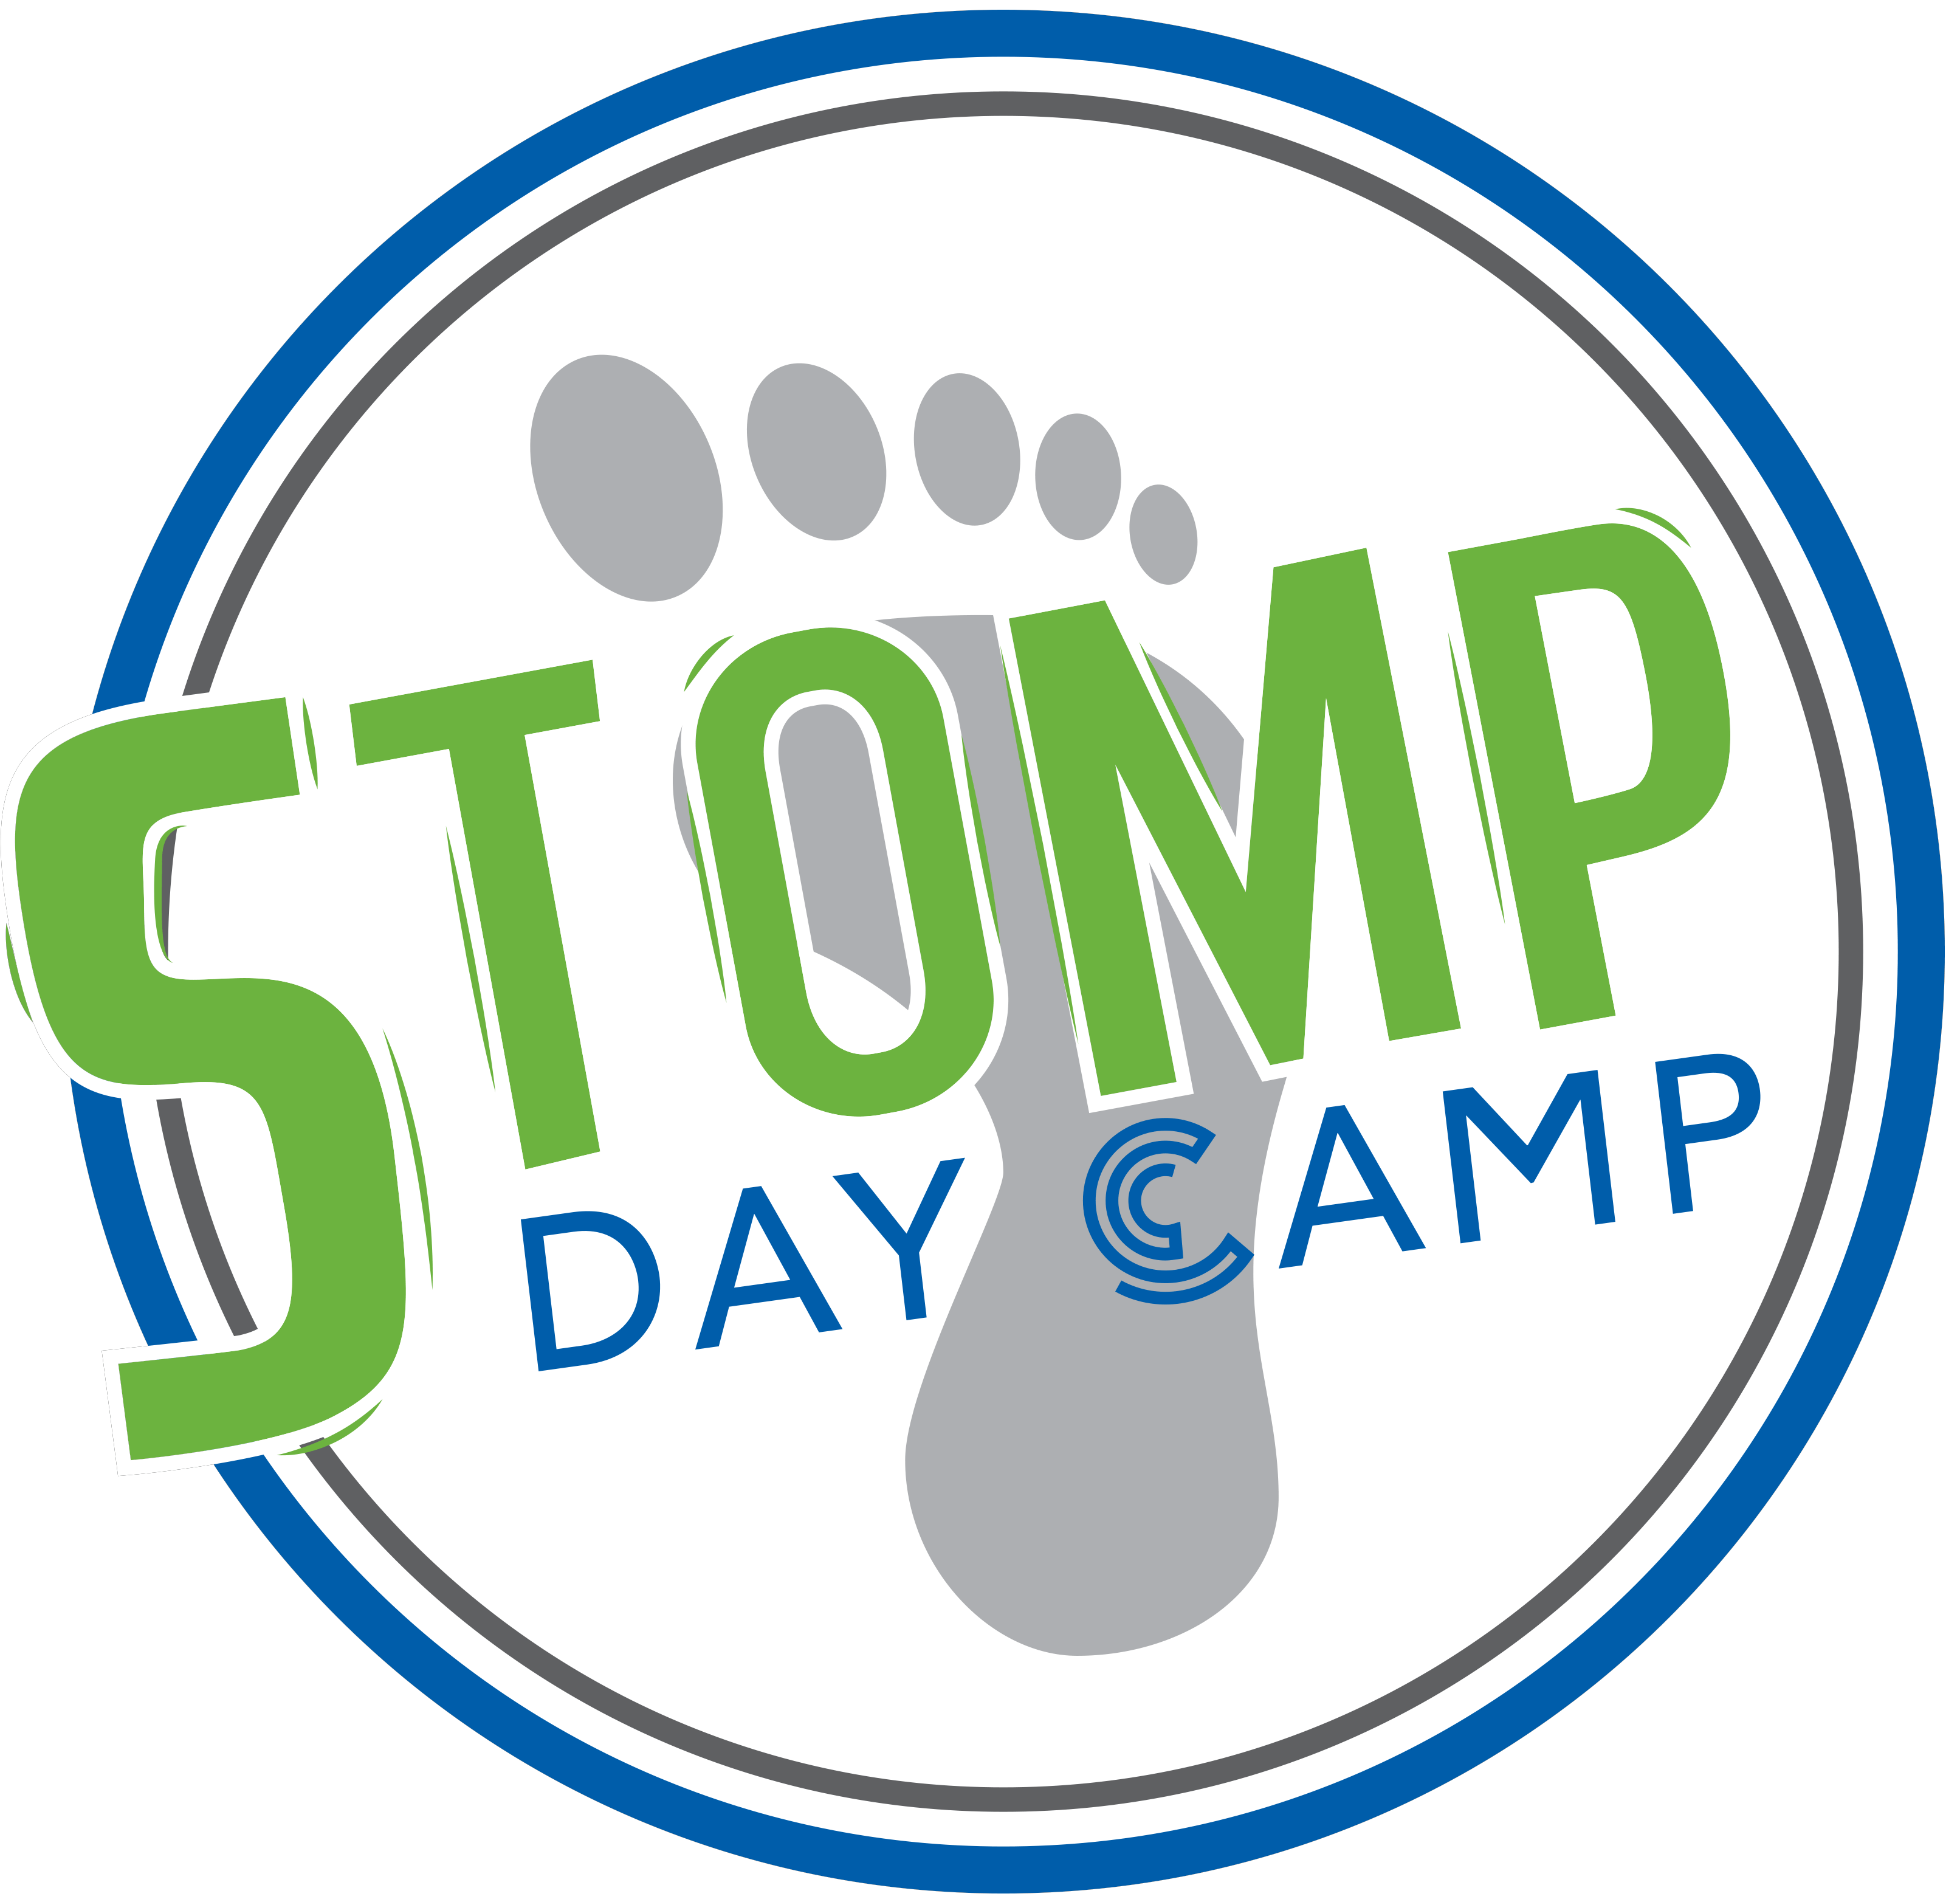 Stomp Day Camp